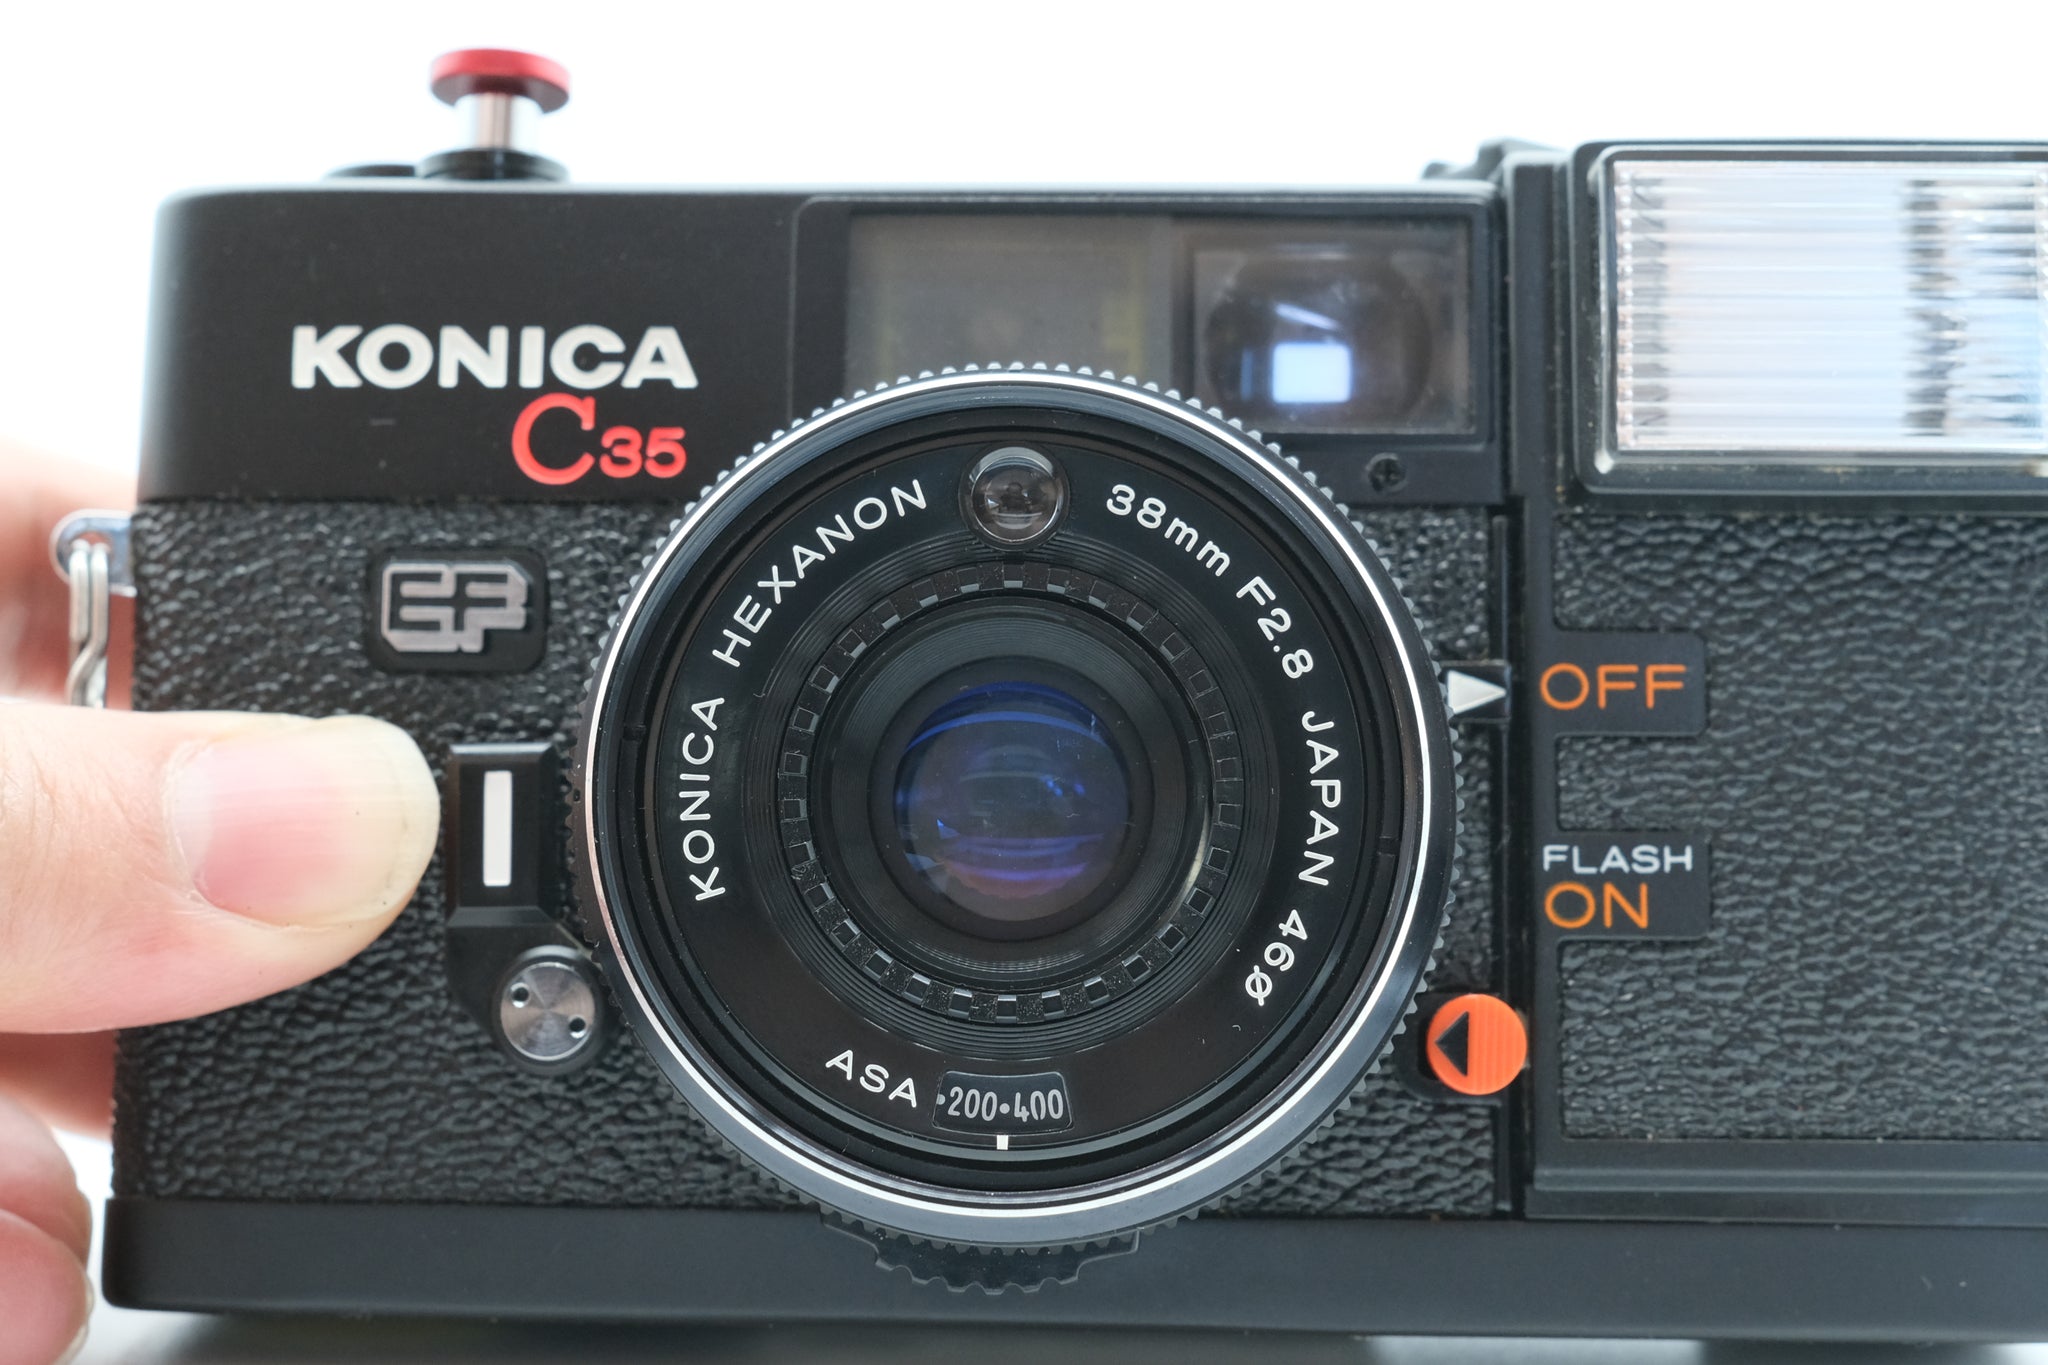 Konica C35 EF - Serial 1345774 - Excellent Cond